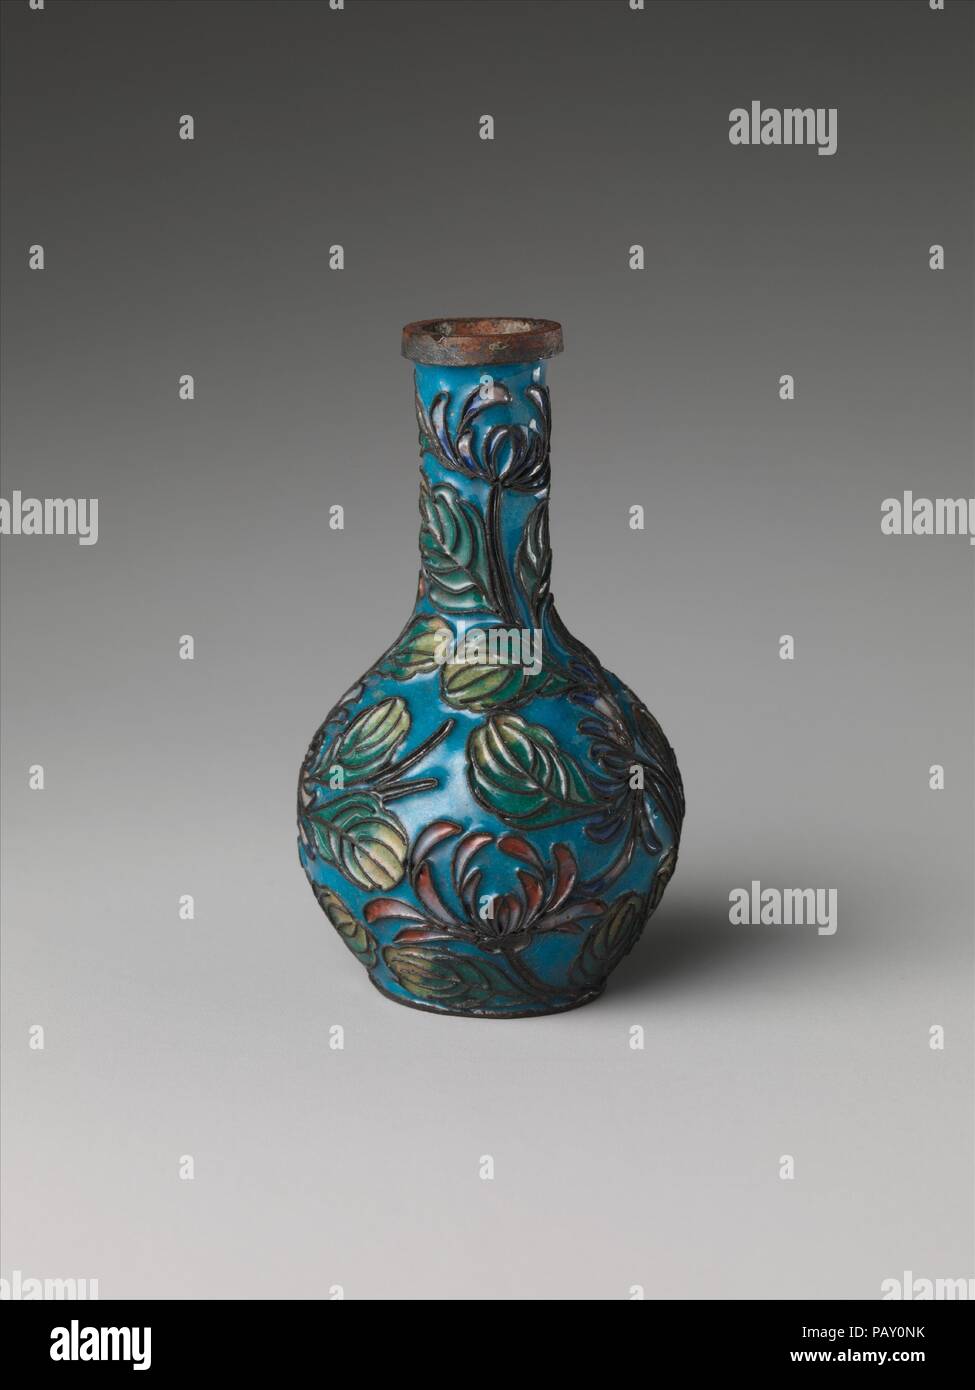 Vase. Culture: China. Dimensions: H. 2 1/2 in. (6.4 cm). Date: 19th century. Museum: Metropolitan Museum of Art, New York, USA. Stock Photo